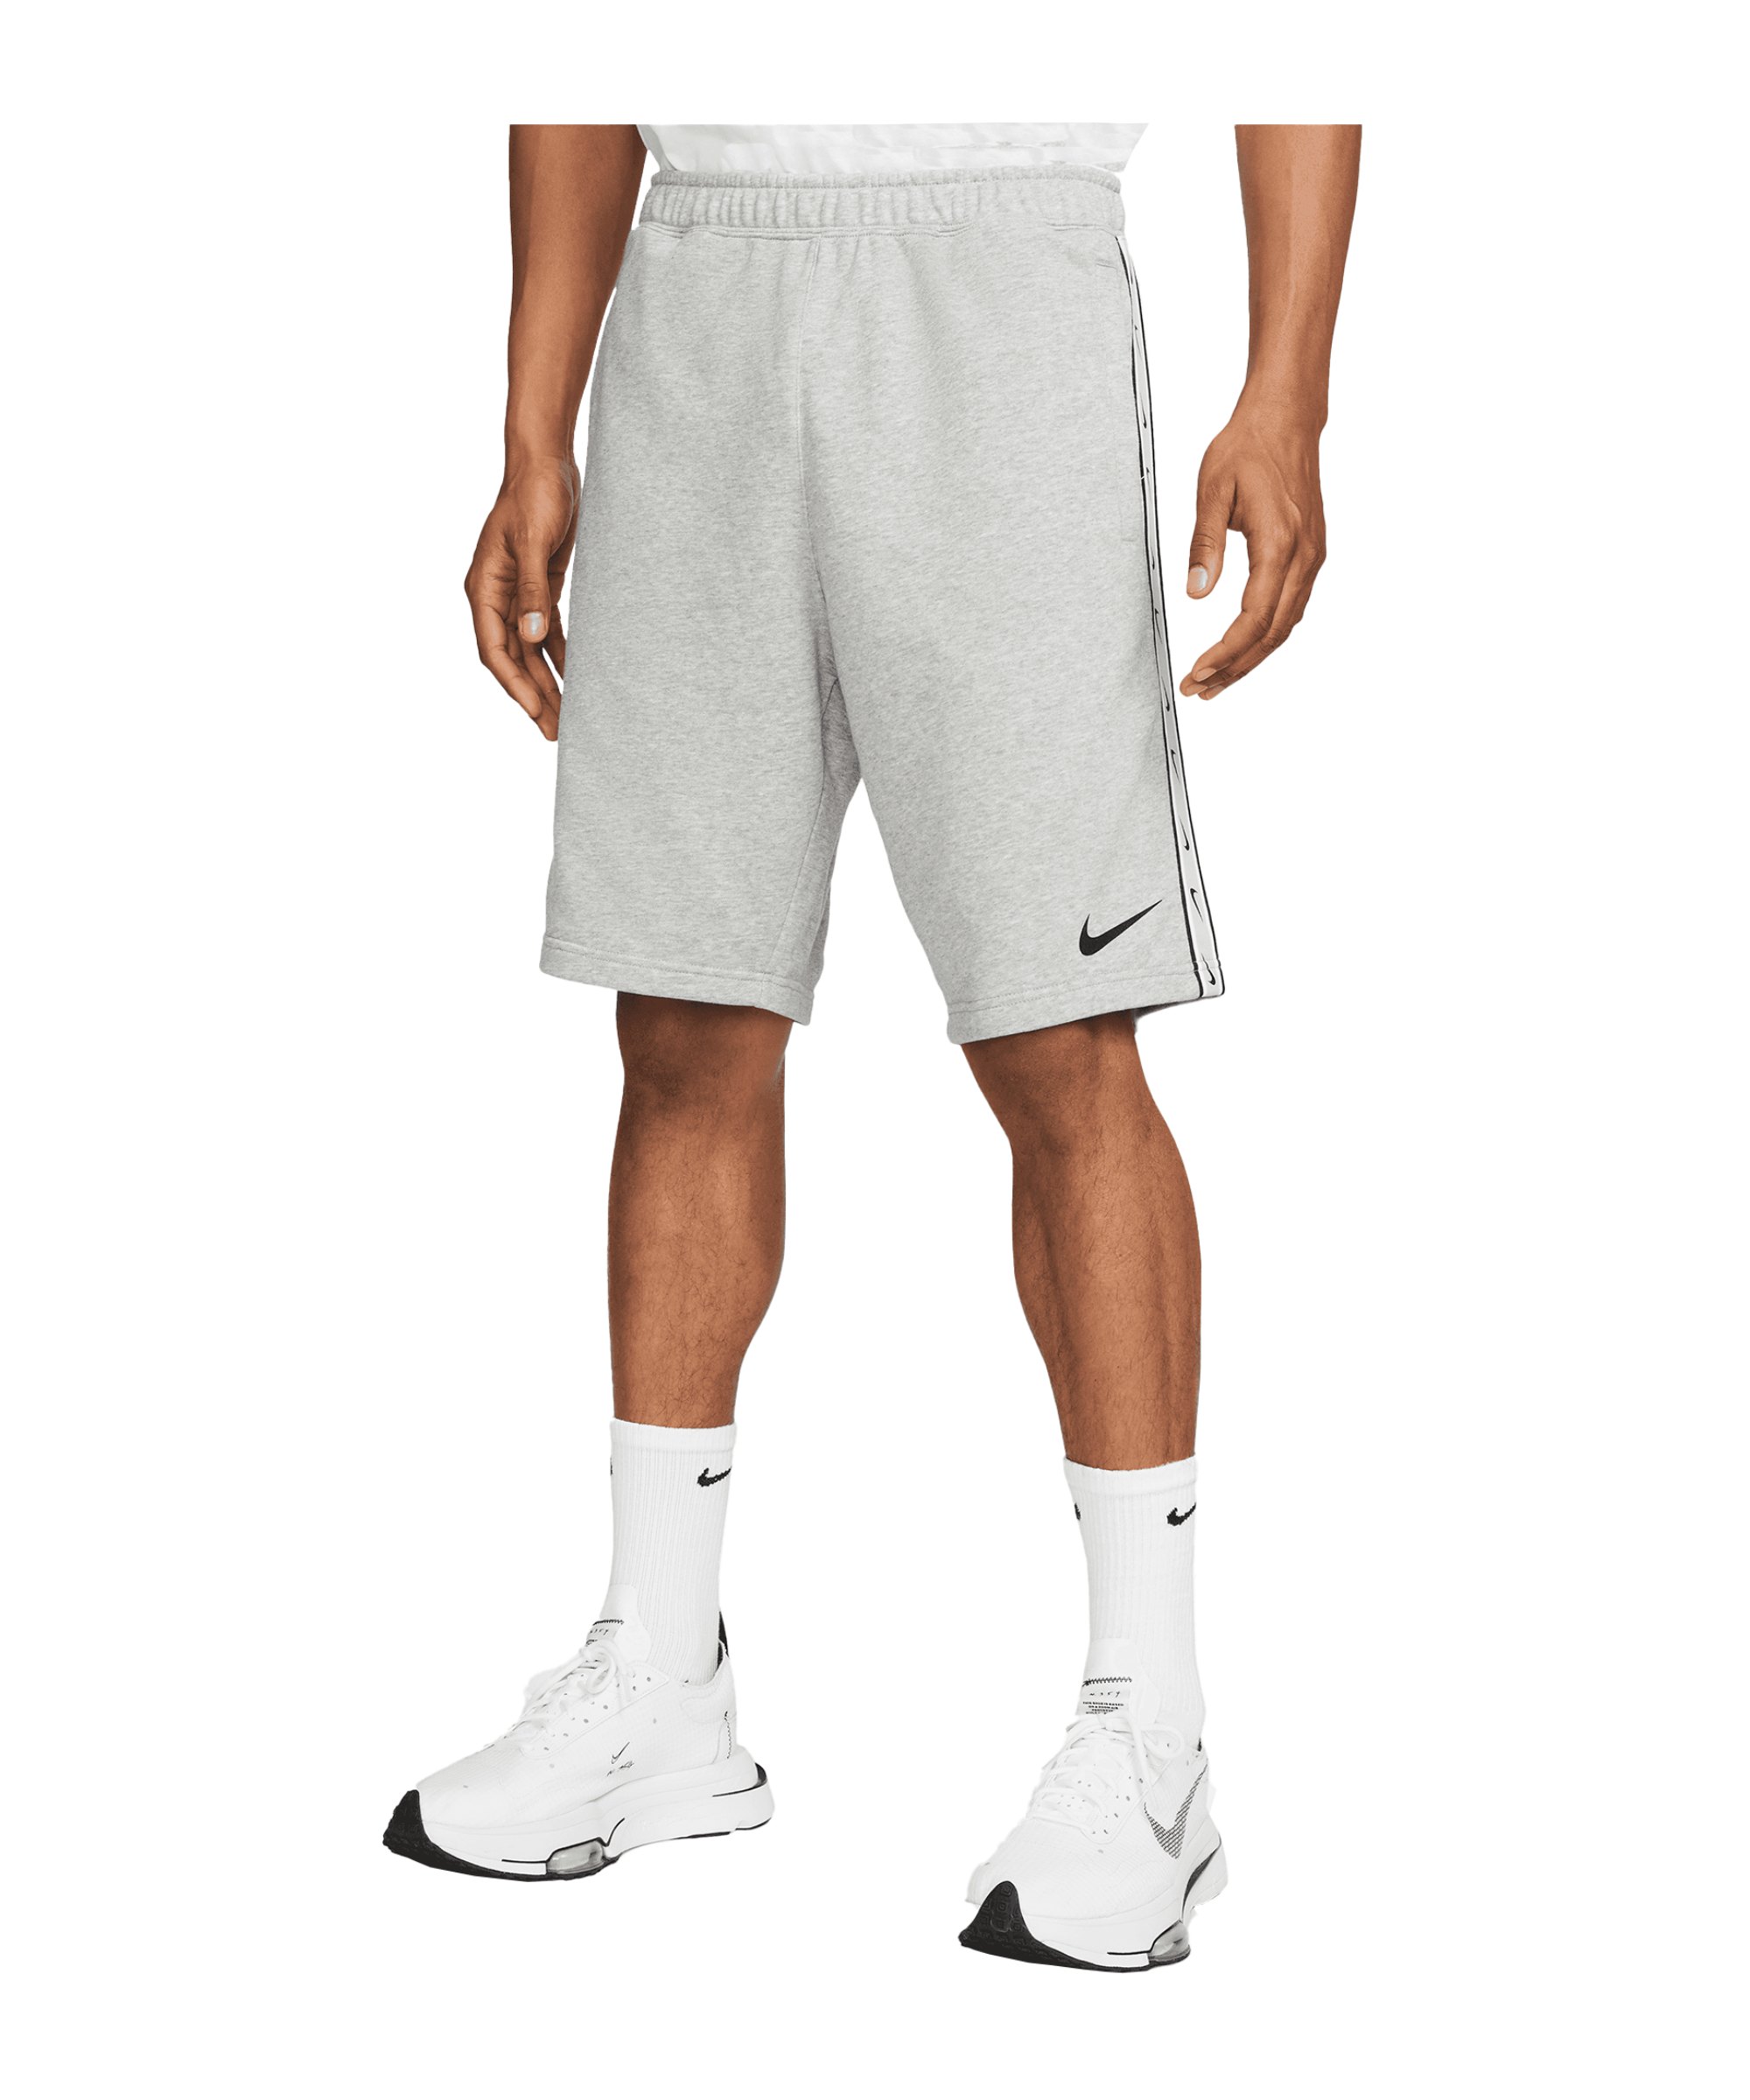 Nike Repeat Fleece Short Grau Schwarz F063 - grau